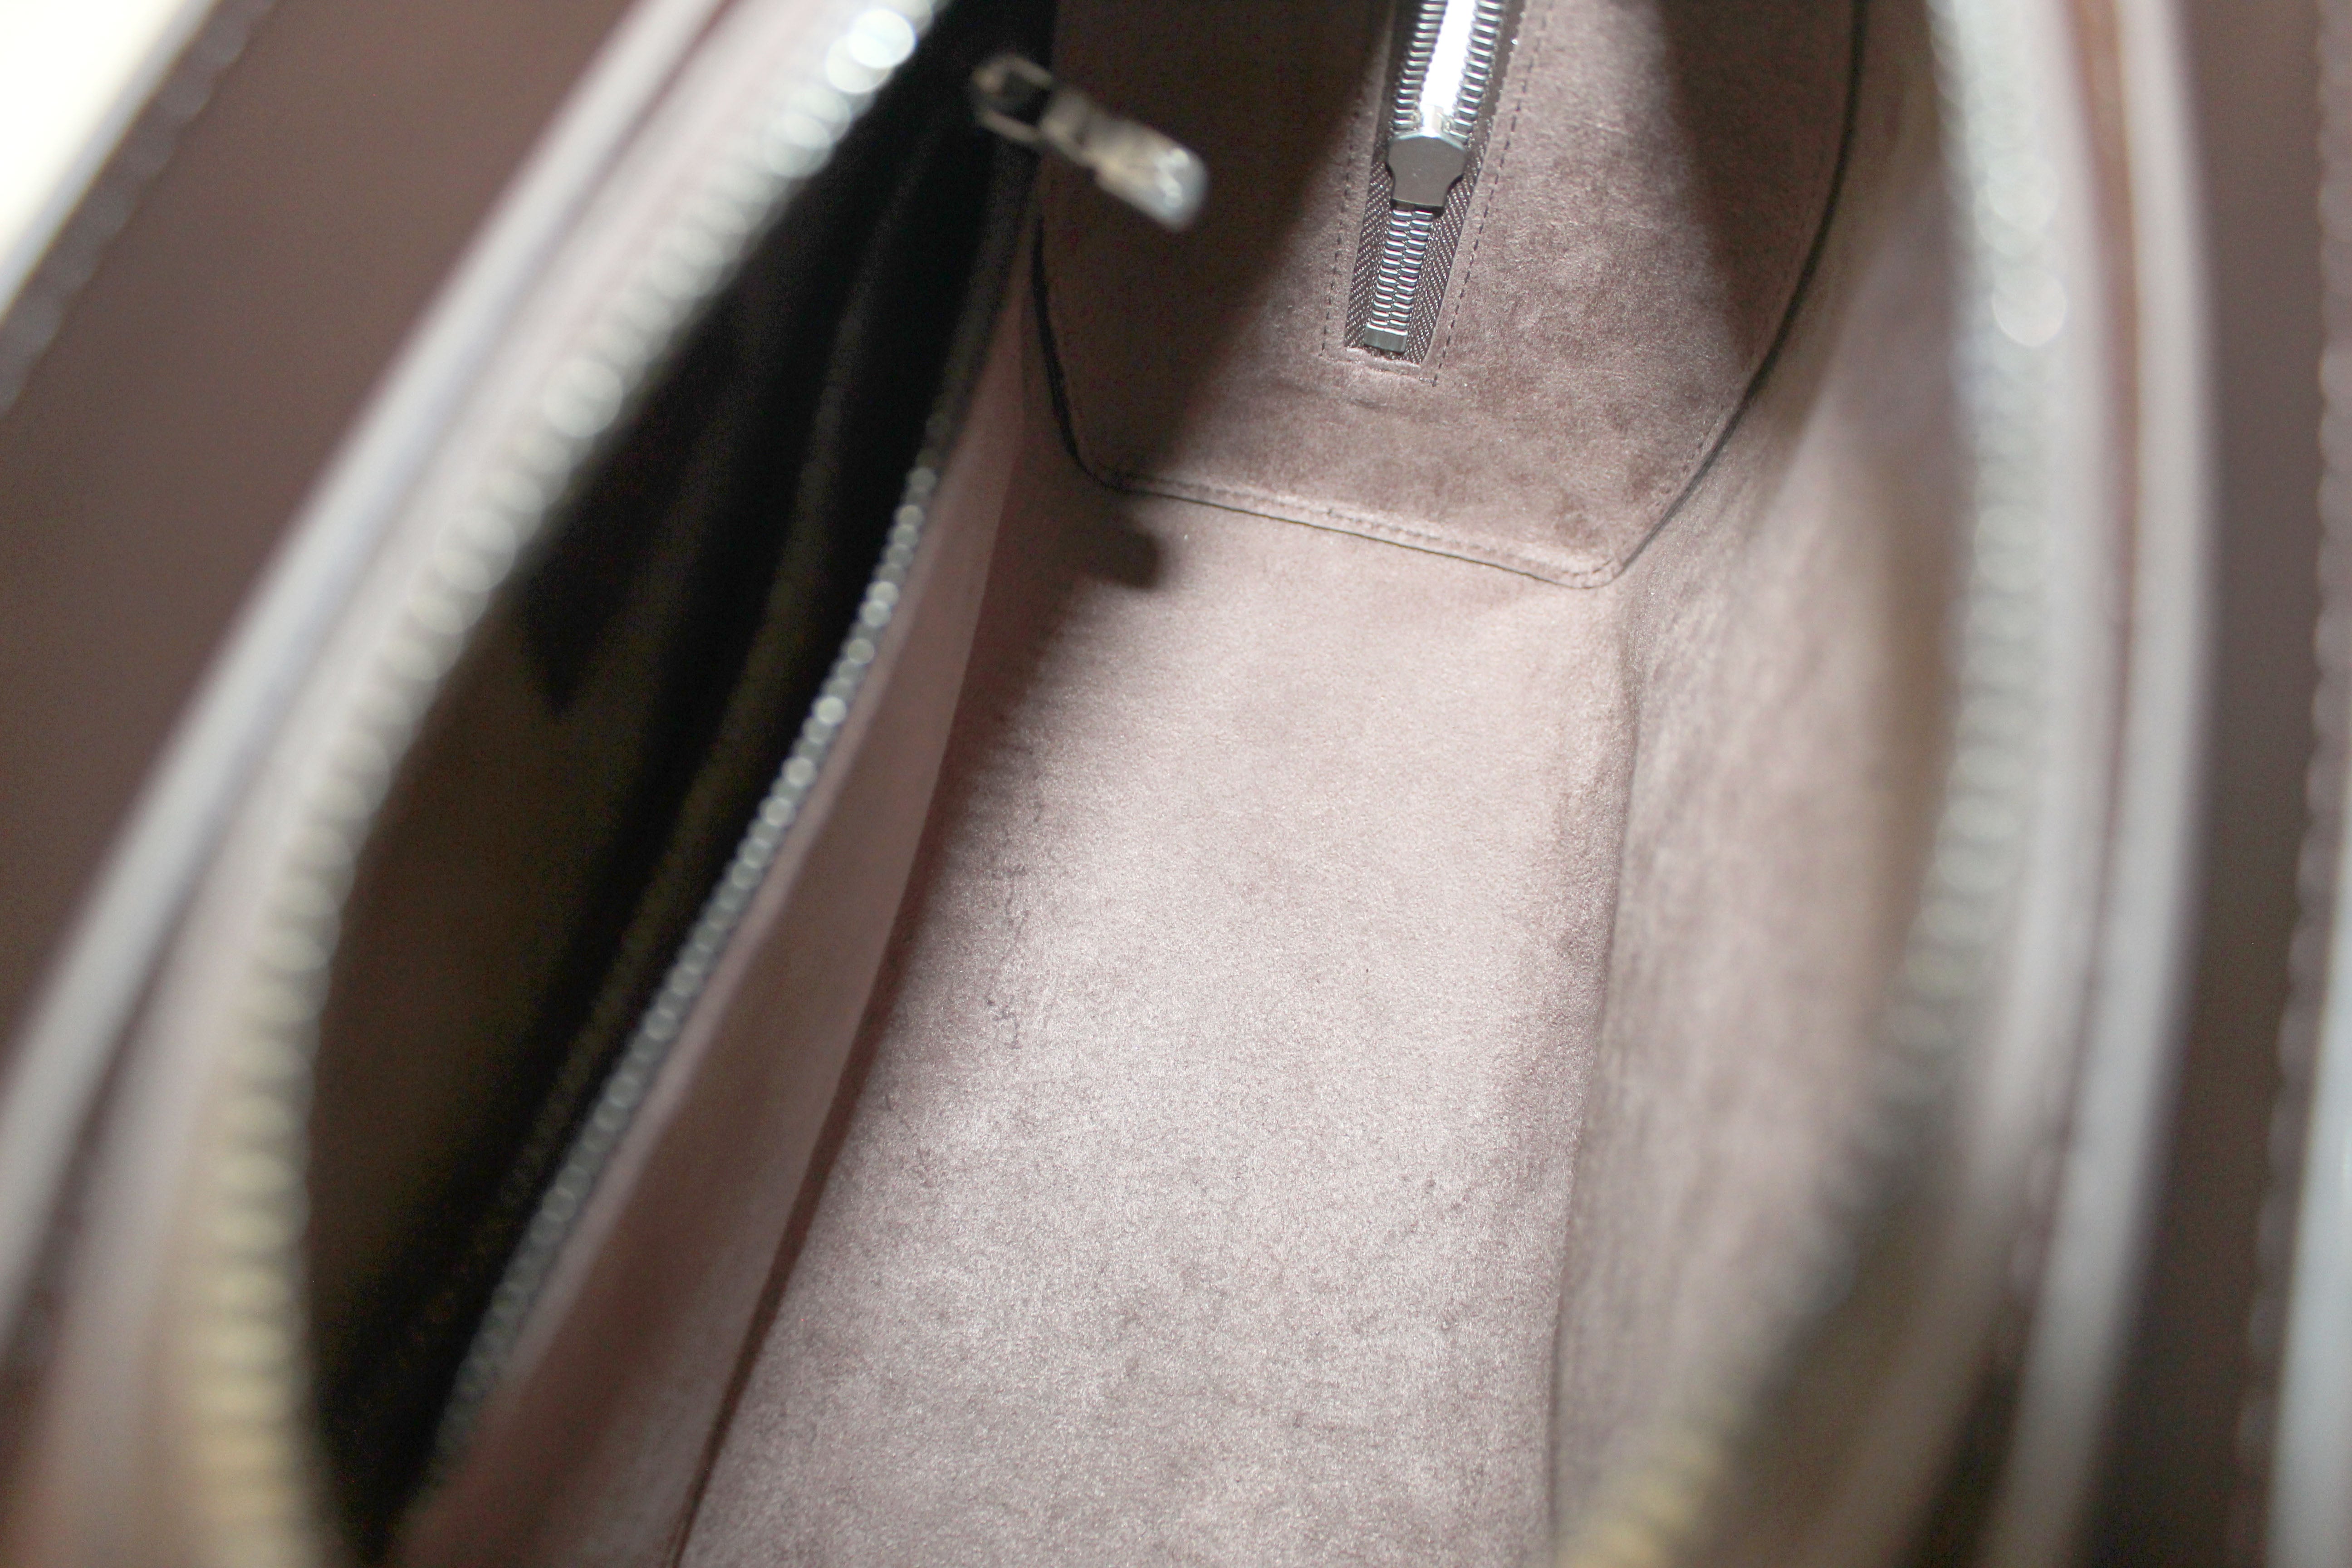 Authentic Louis Vuitton Epi Leather Brown Pont Neuf Bag